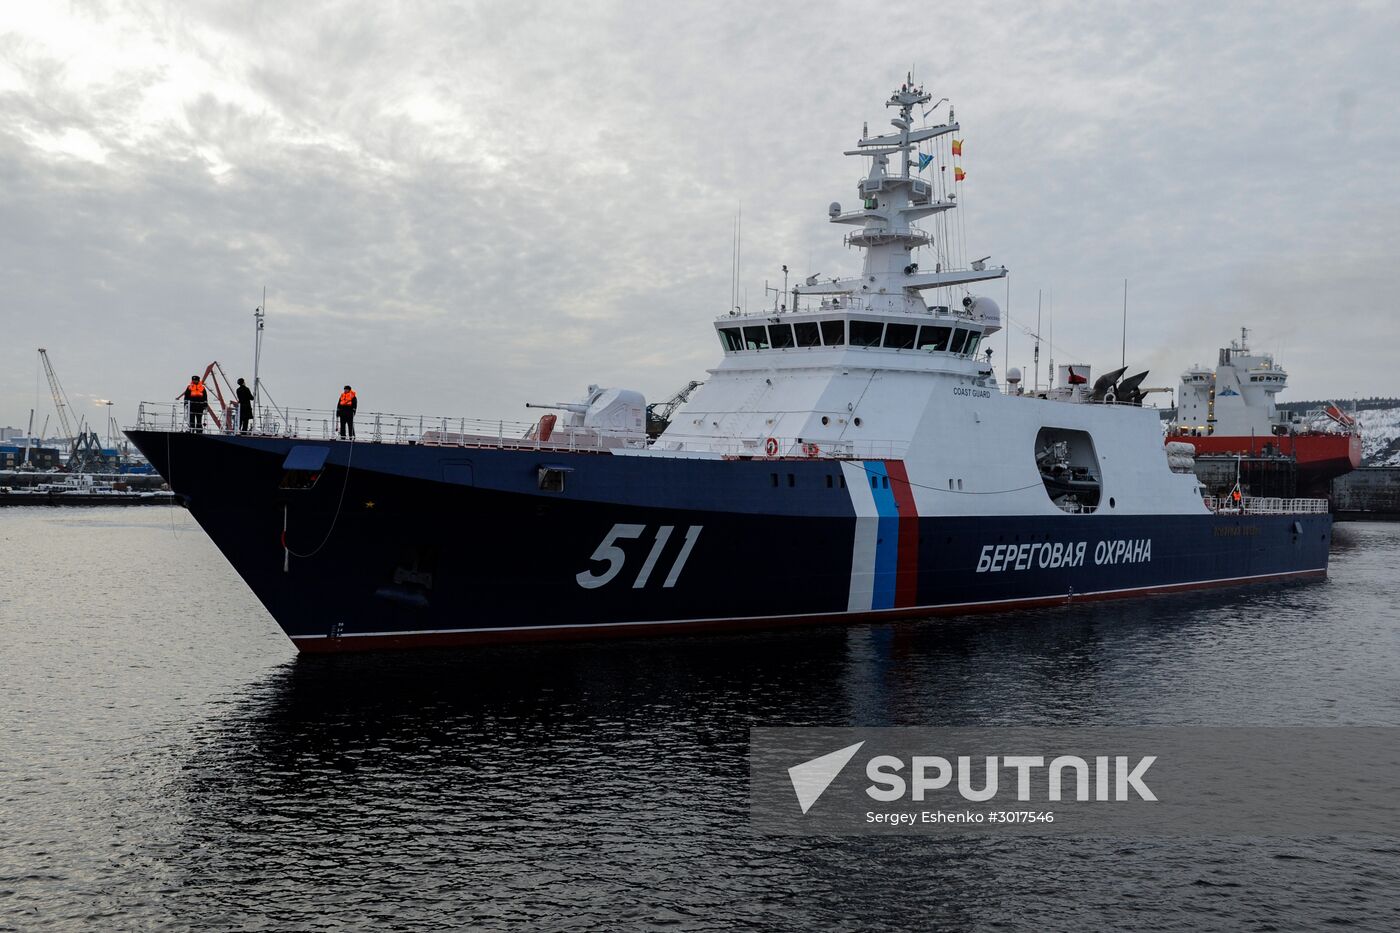 Ceremonial greetings for Polyarnaya Zvezda coast guard ship